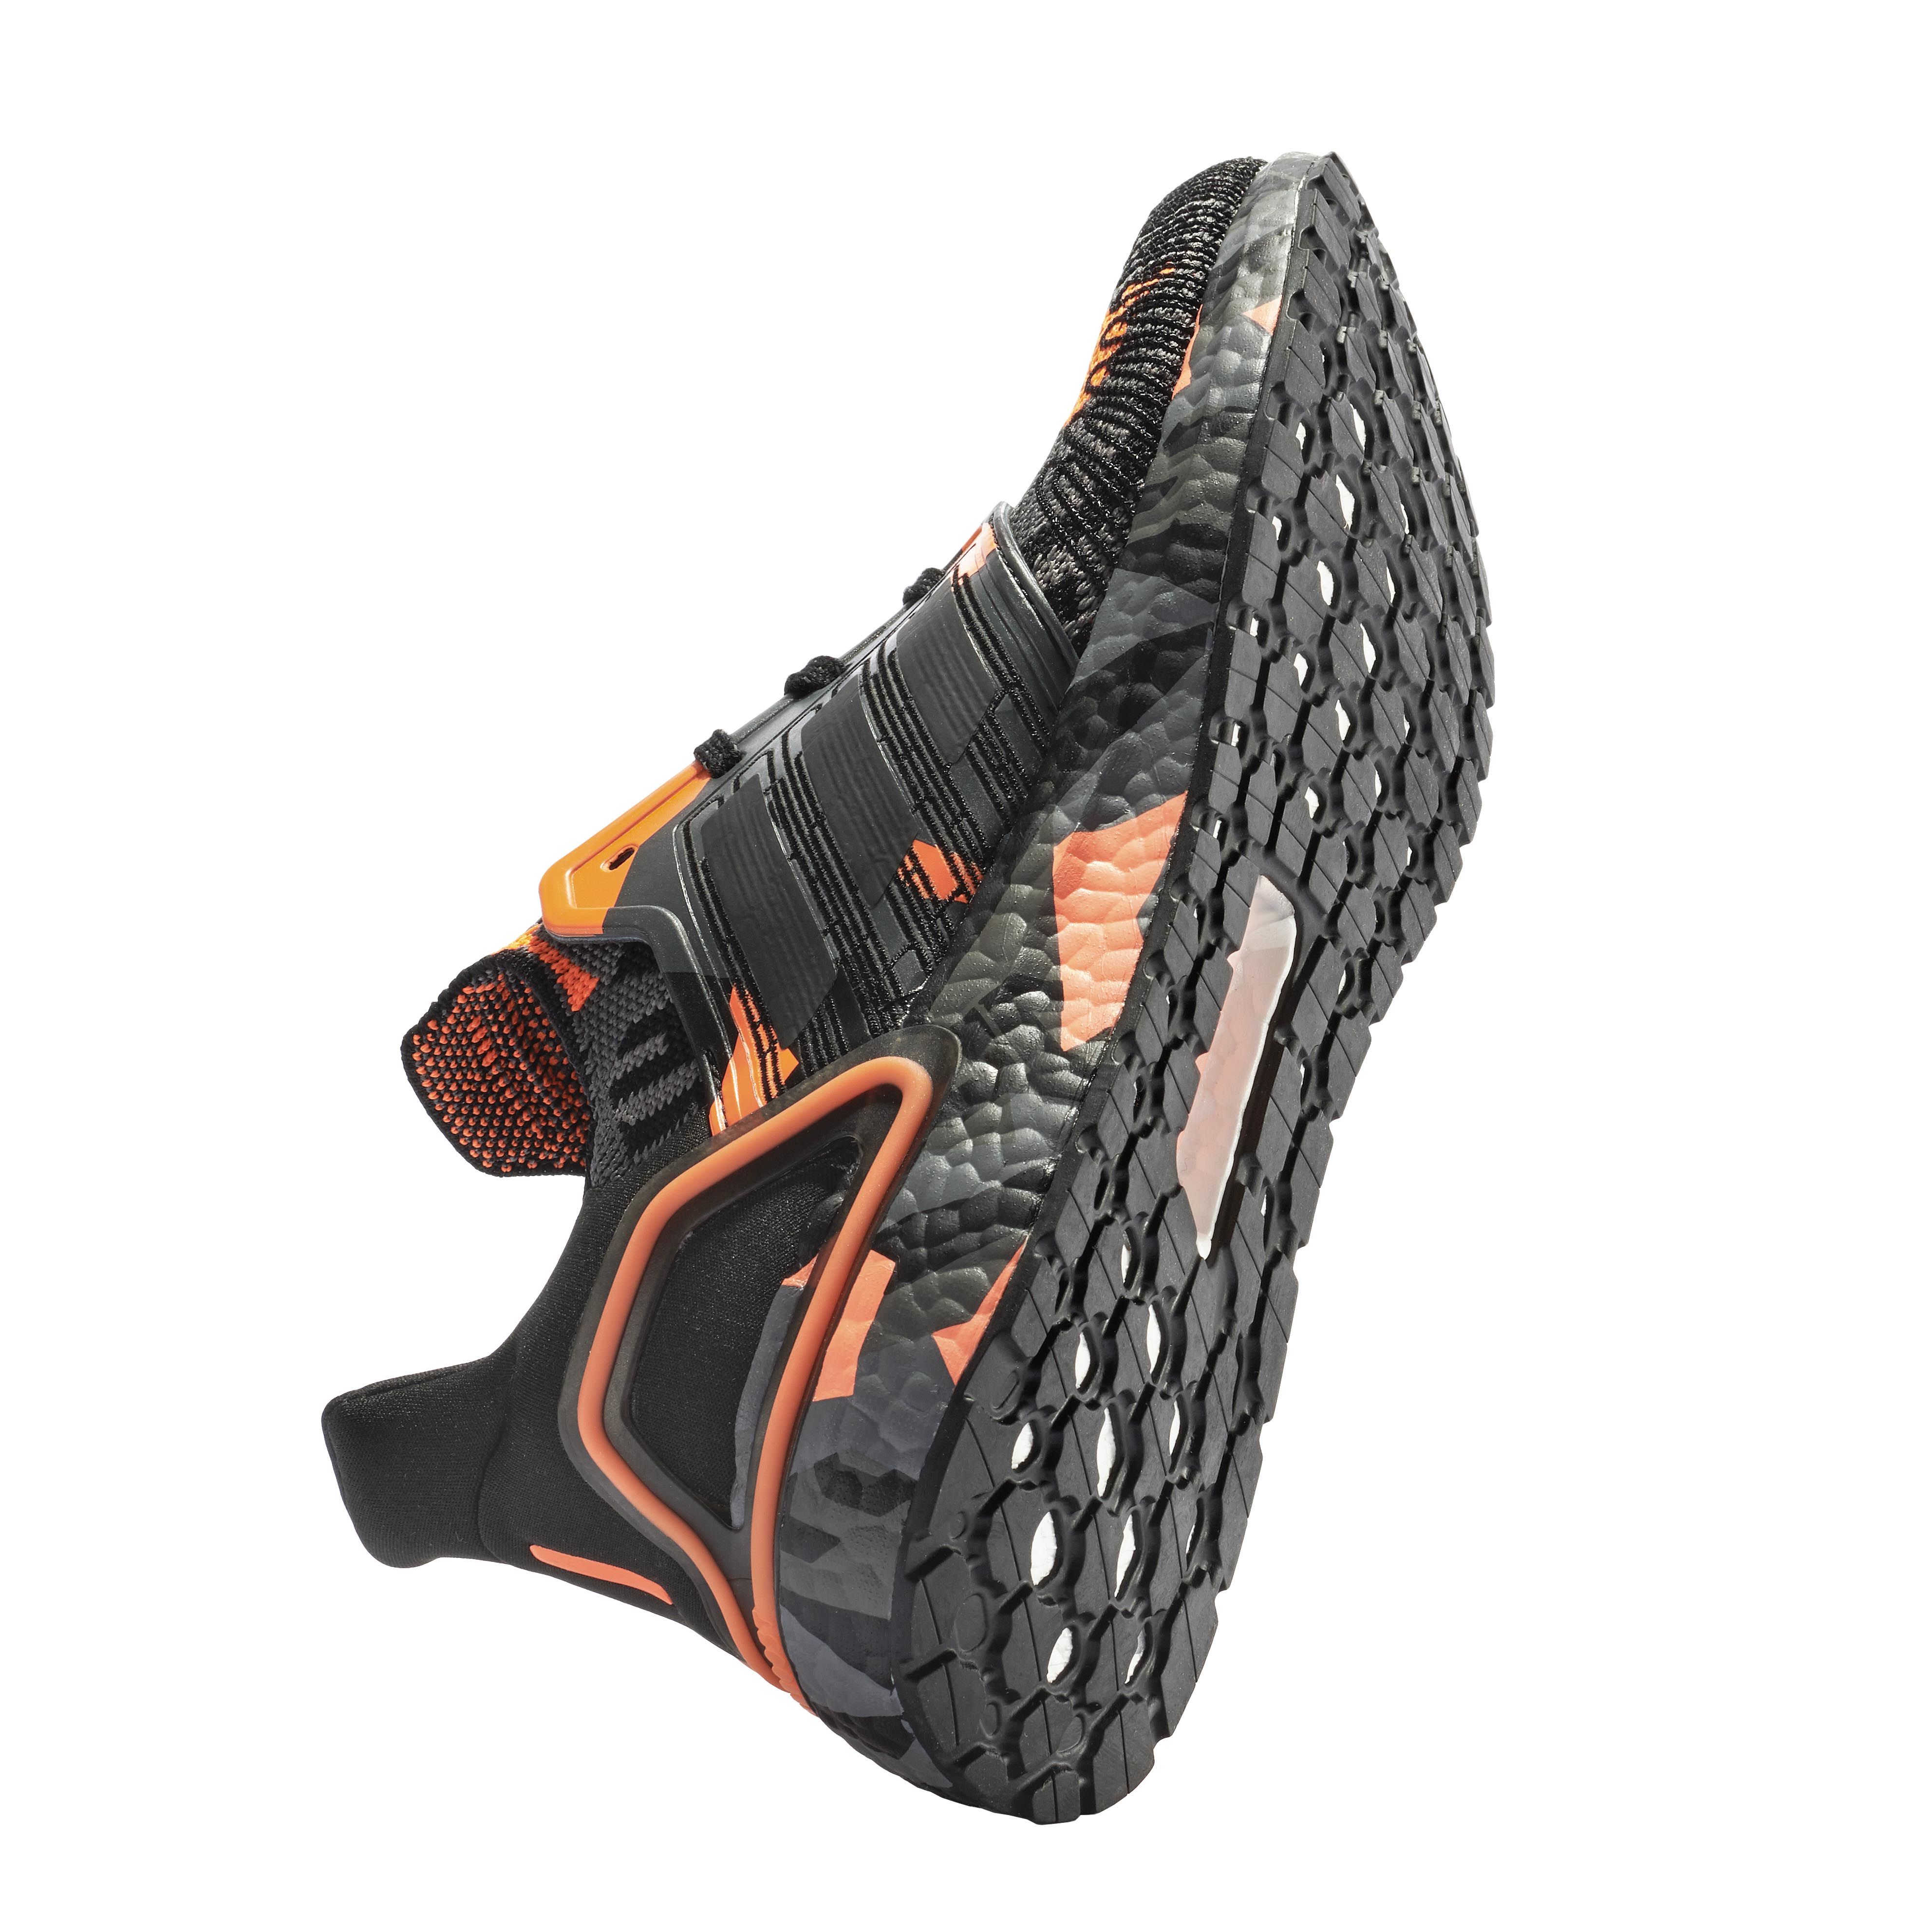 Best running shoes 2020 - Adidas 